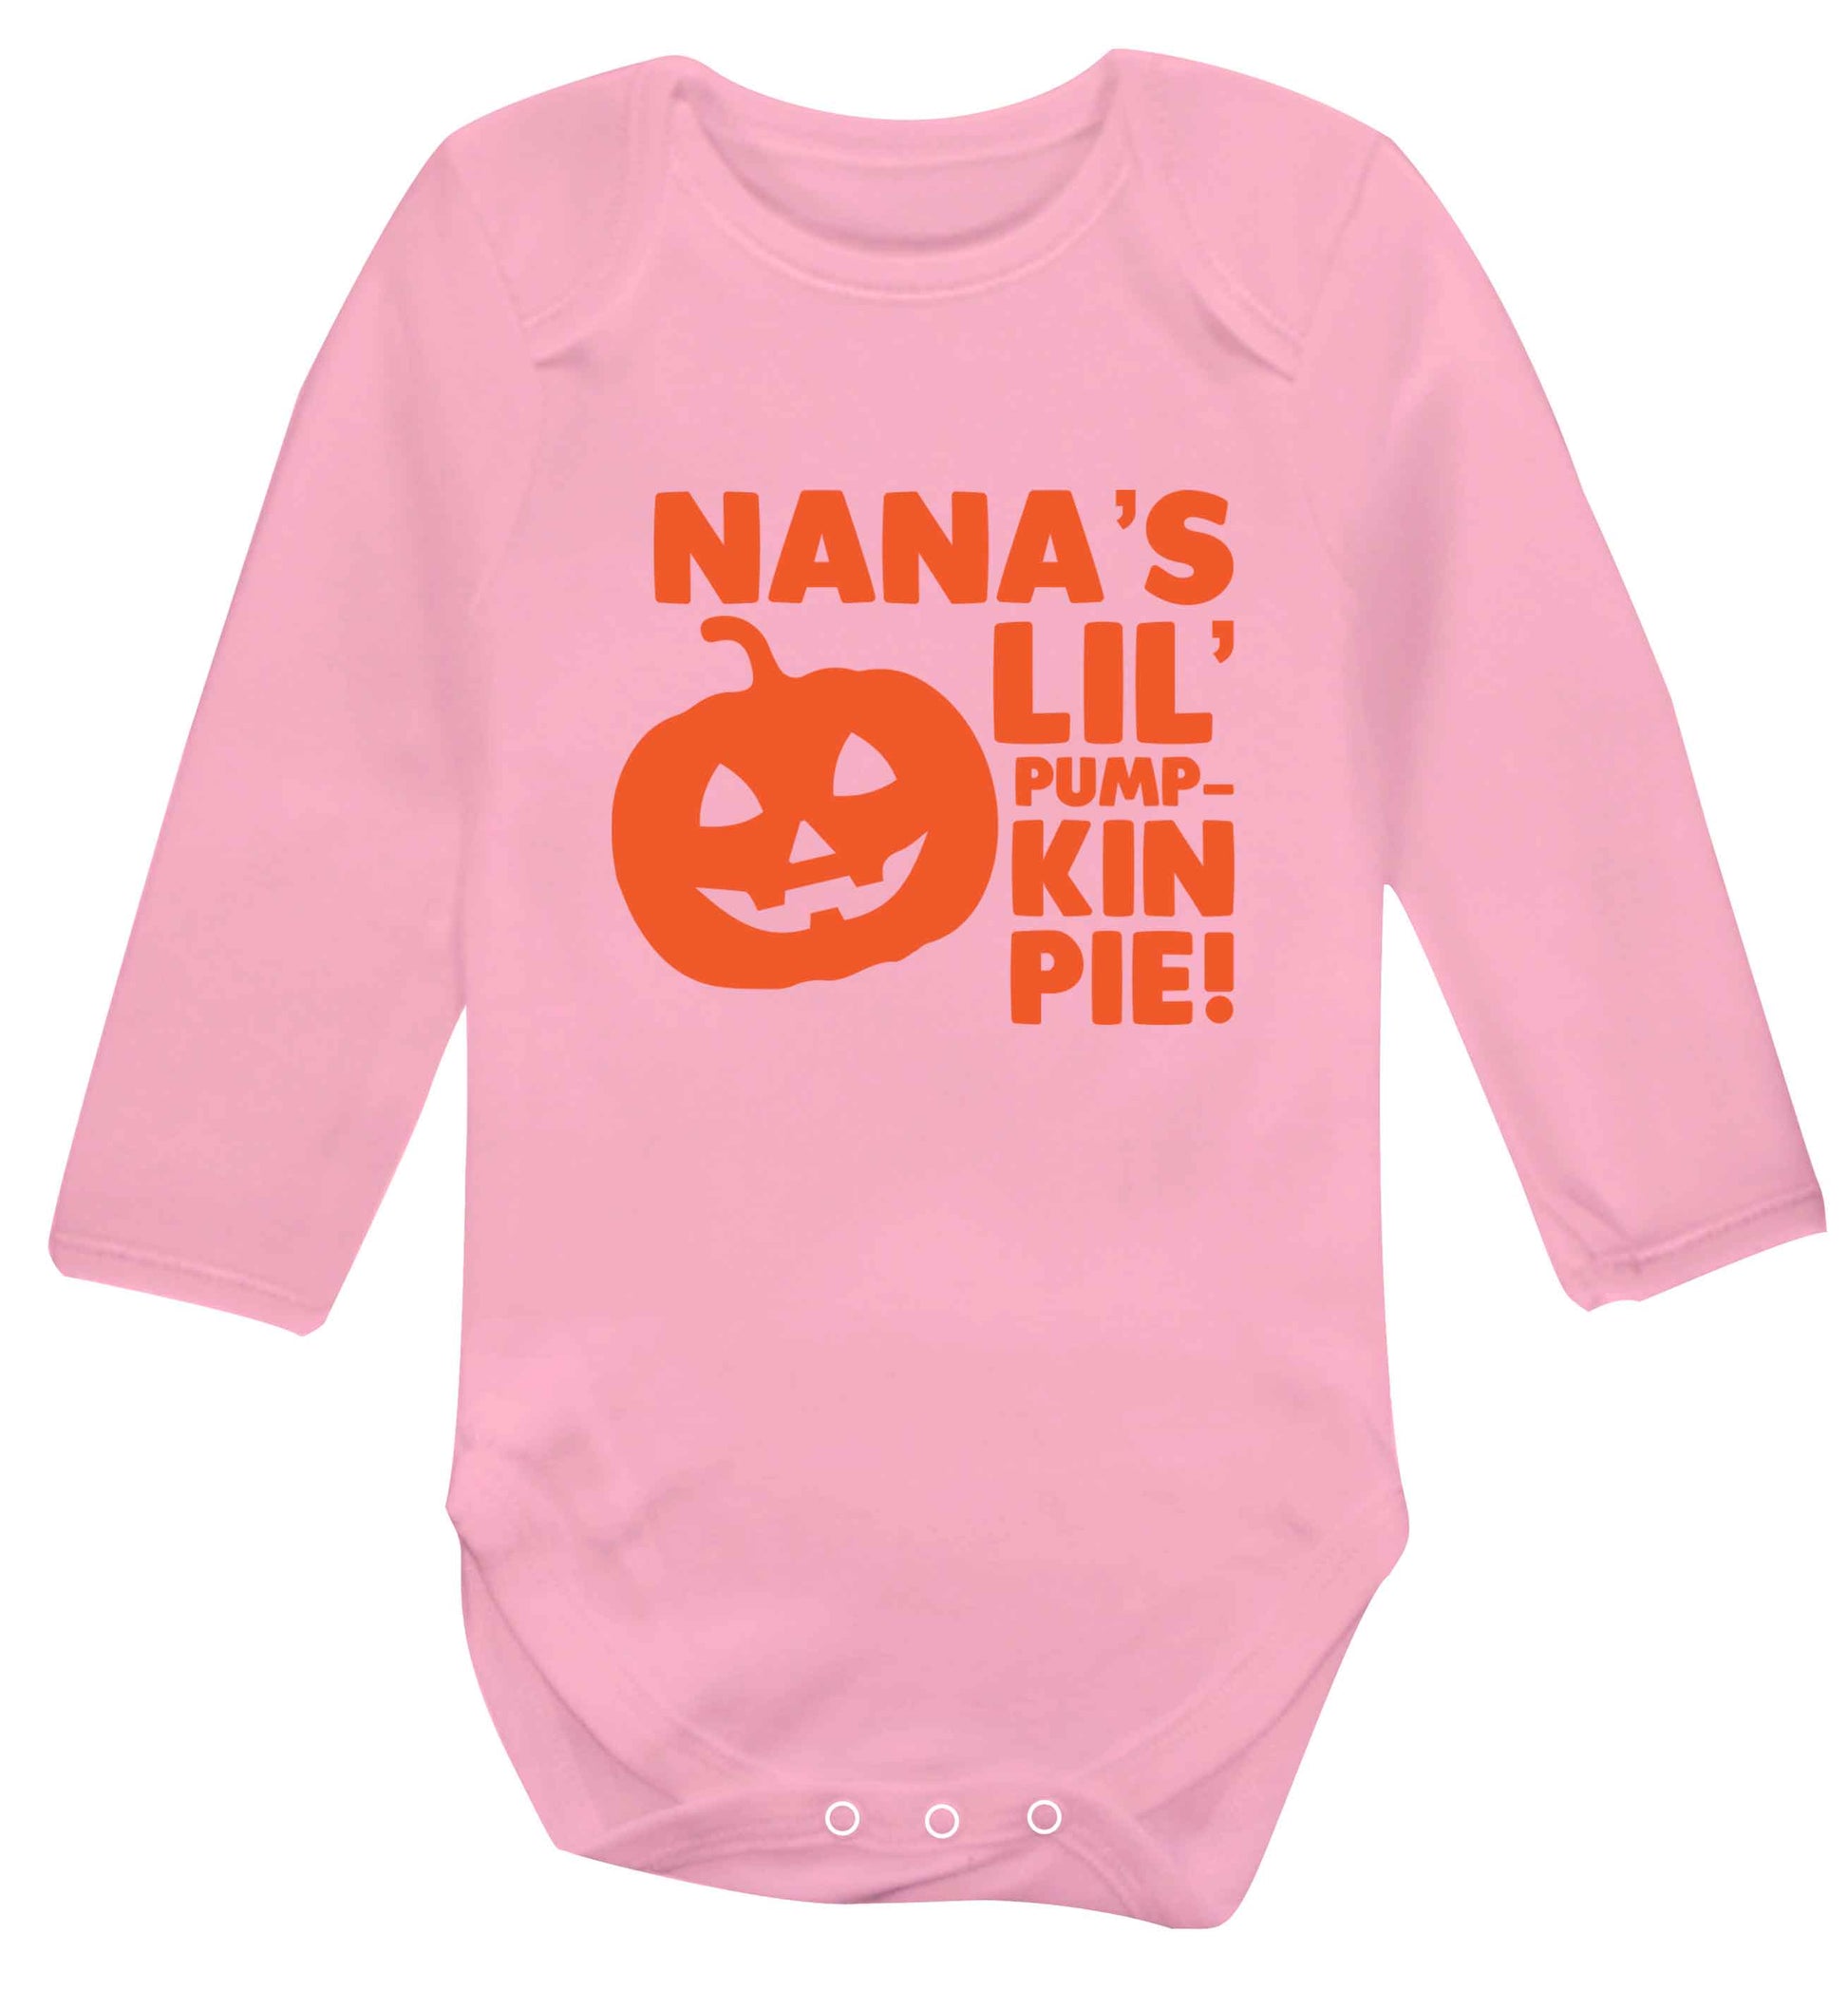 Nana's lil' pumpkin pie baby vest long sleeved pale pink 6-12 months